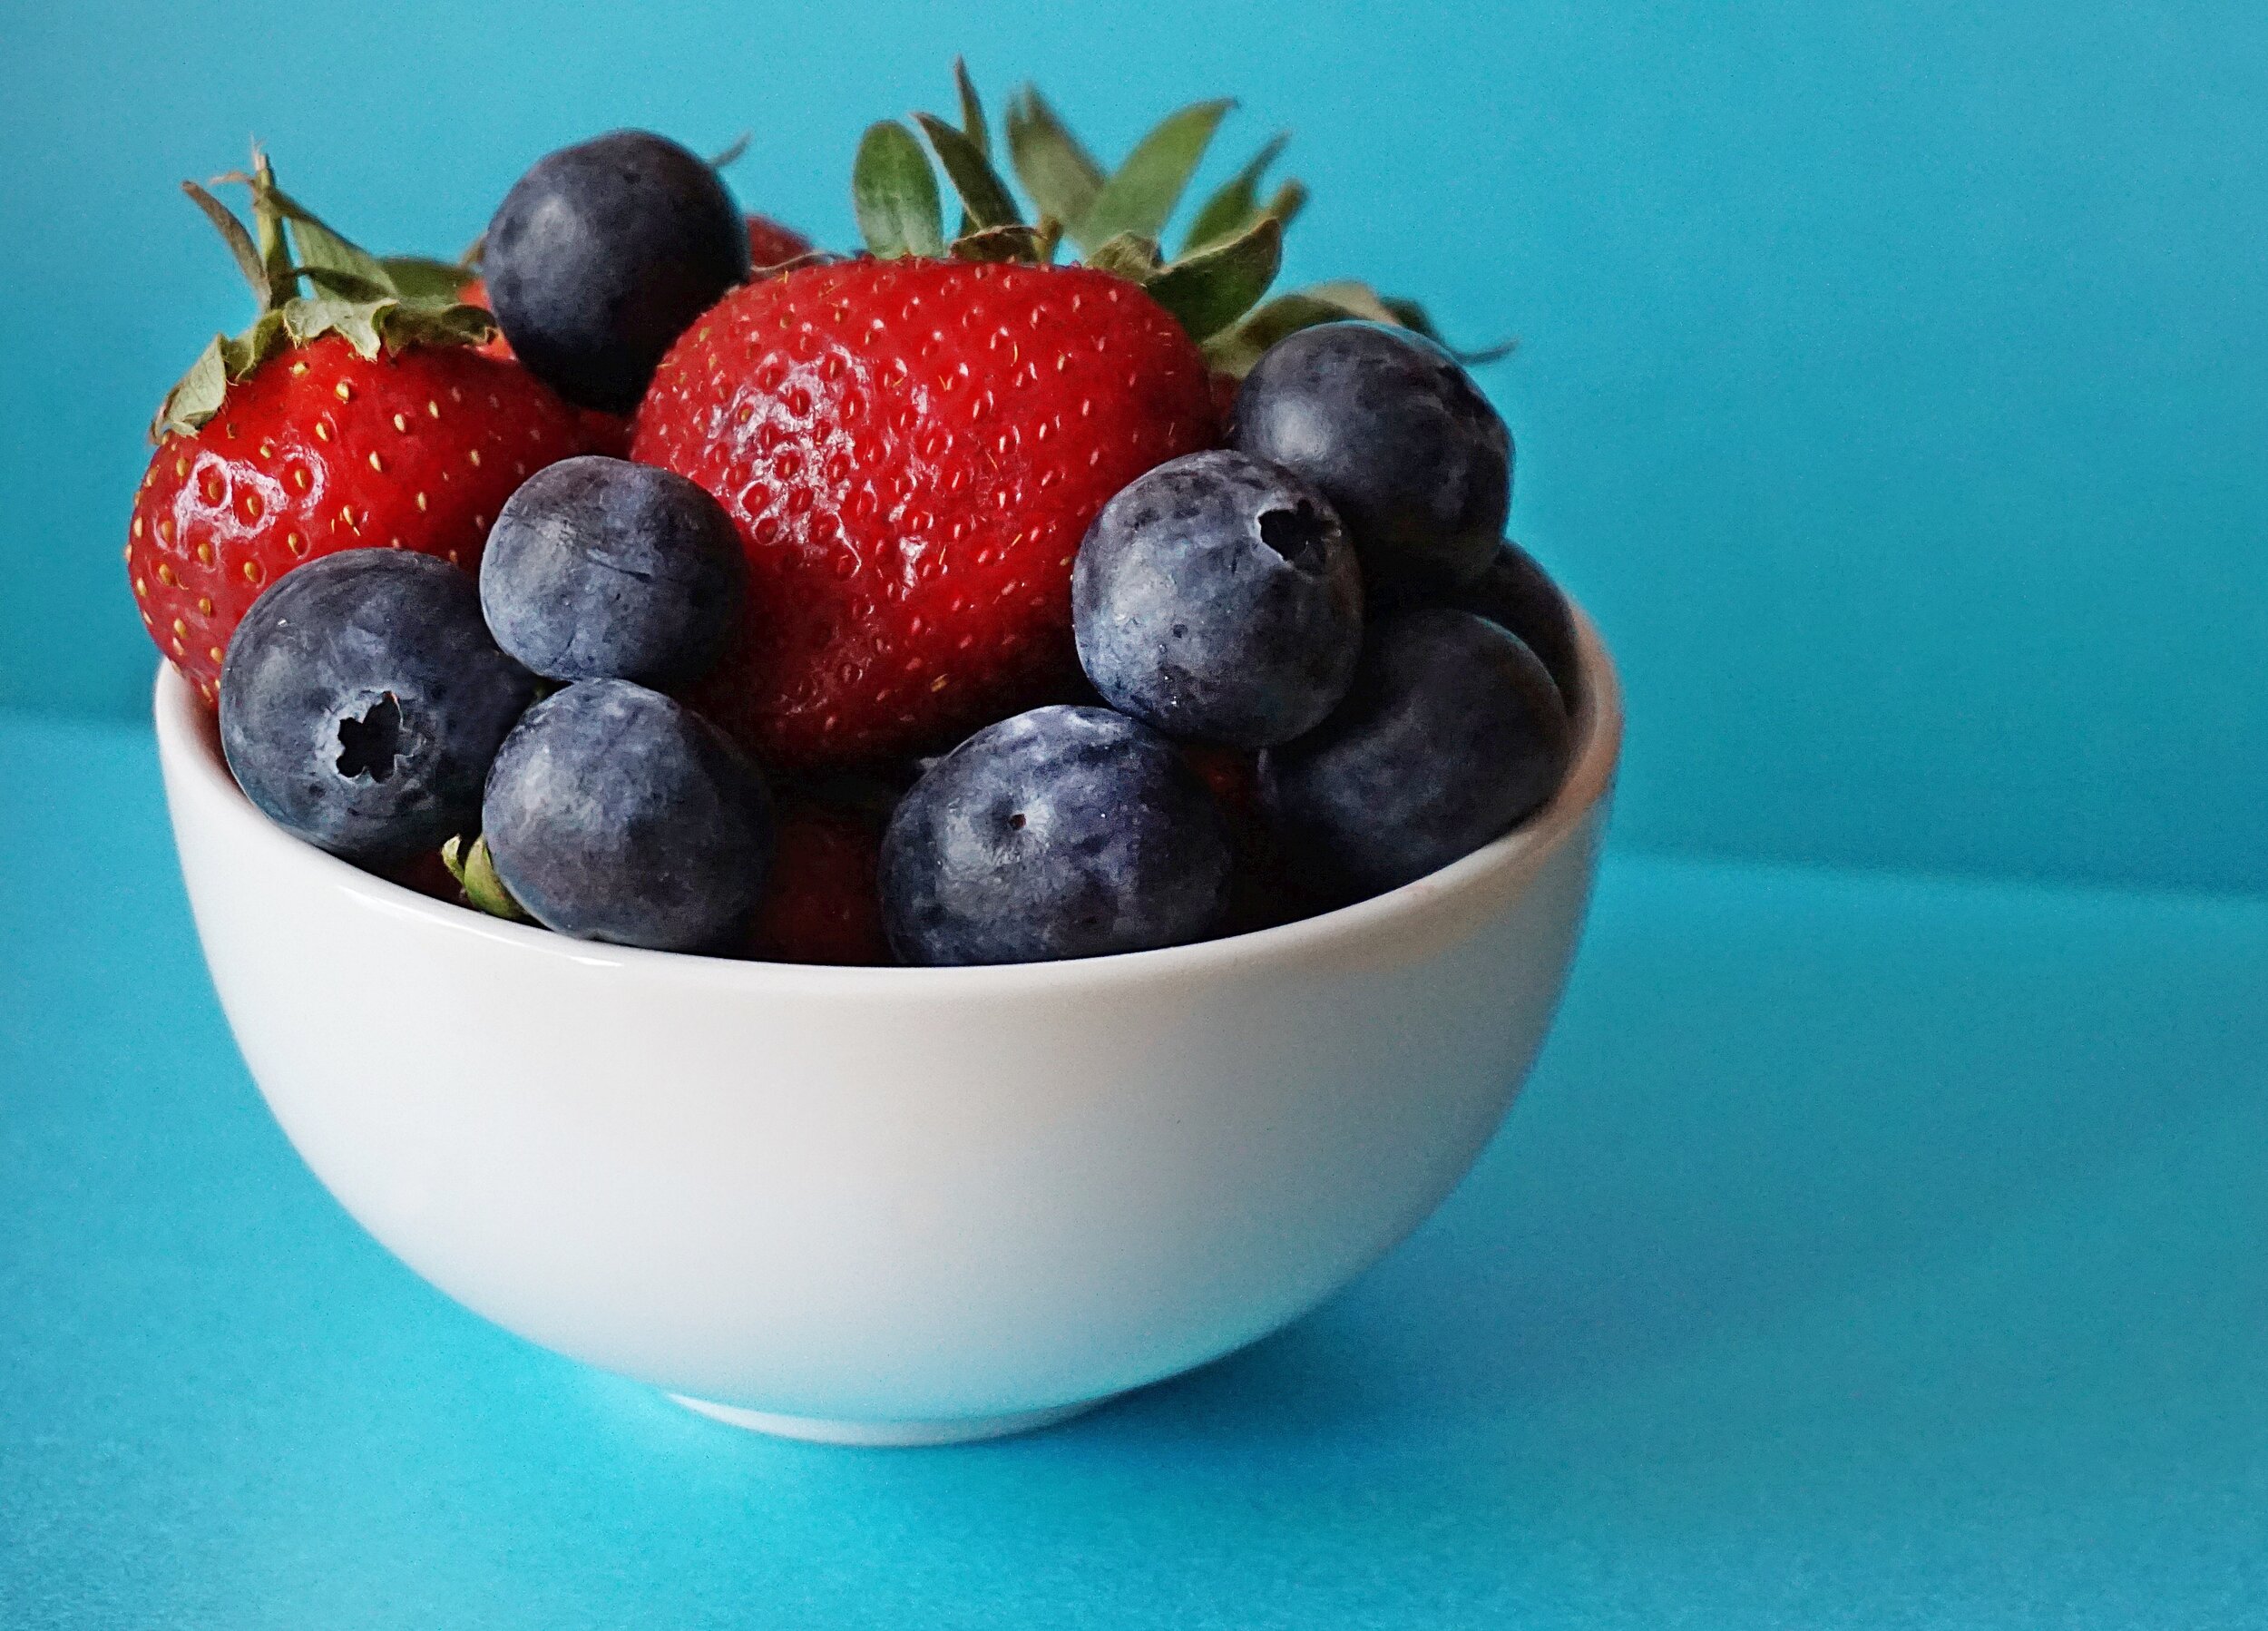 blueberries-and-strawberries-in-white-ceramic-bowl-1120575.jpg